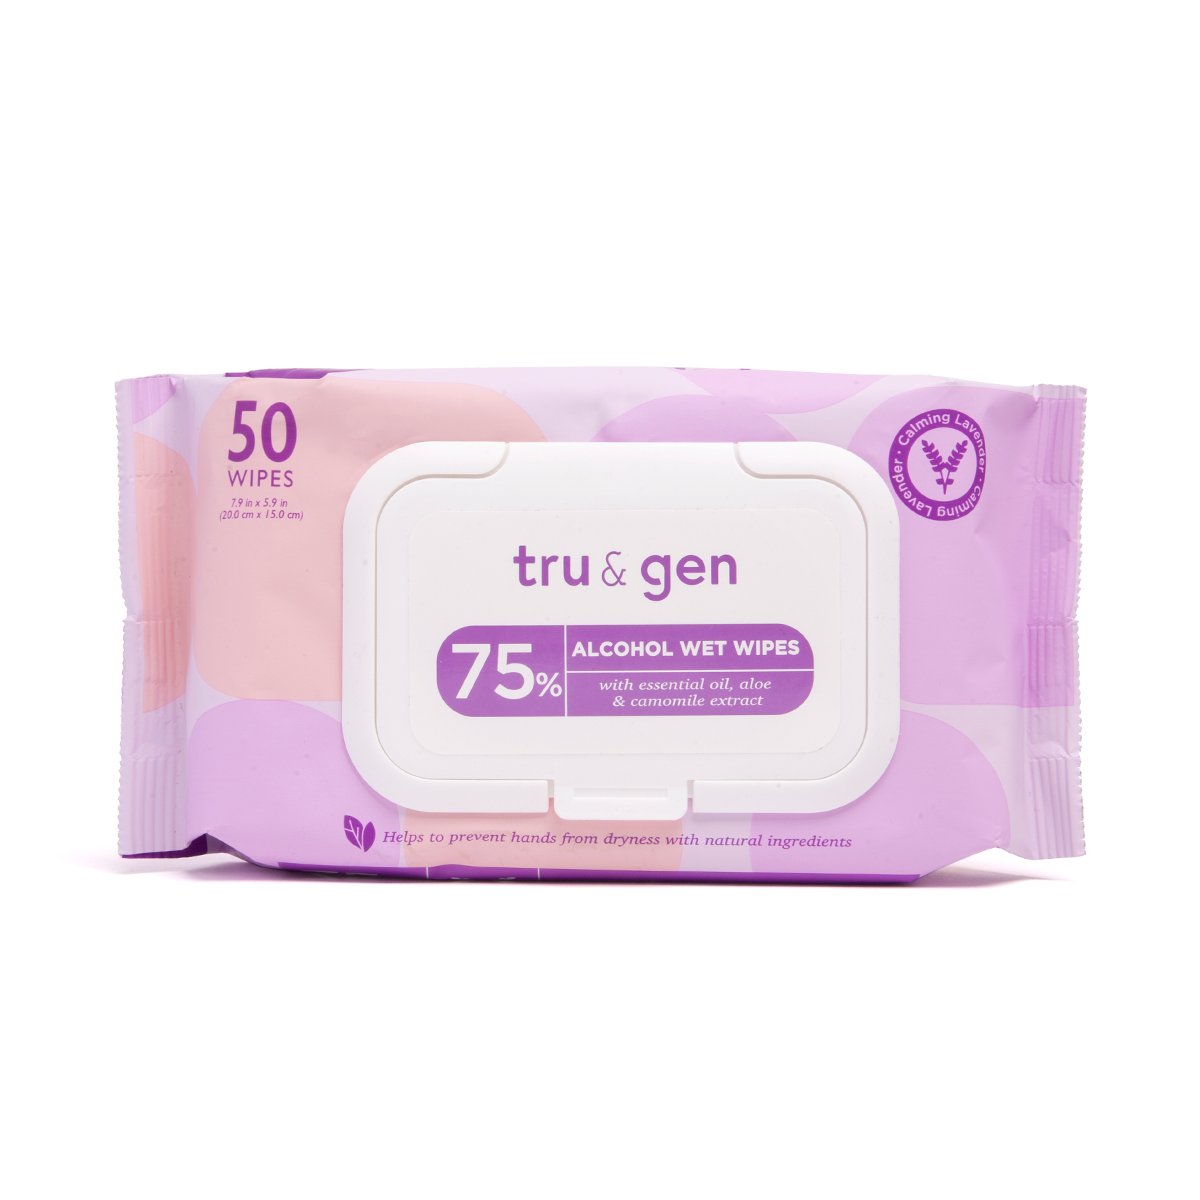 Tru & Gen | 75% Alcohol Wet Wipes | 50 Wipes - Calming Lavender Alcohol Wipes Biohazard Inc   